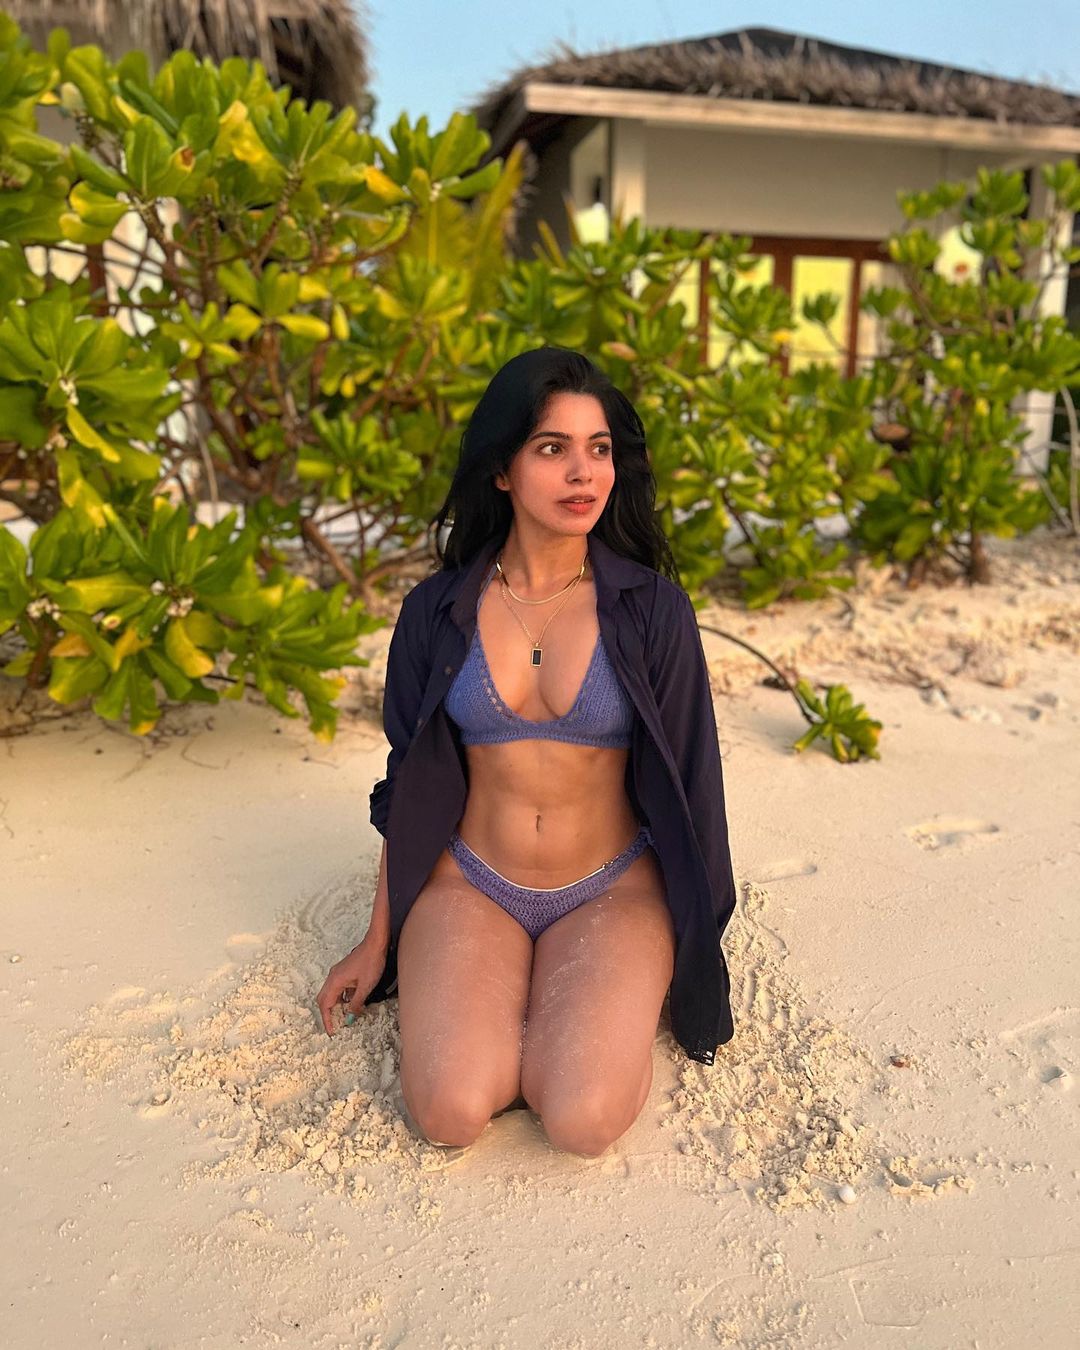 Dhivya Bharathi Sema Hot Bikini Picture from Maldives